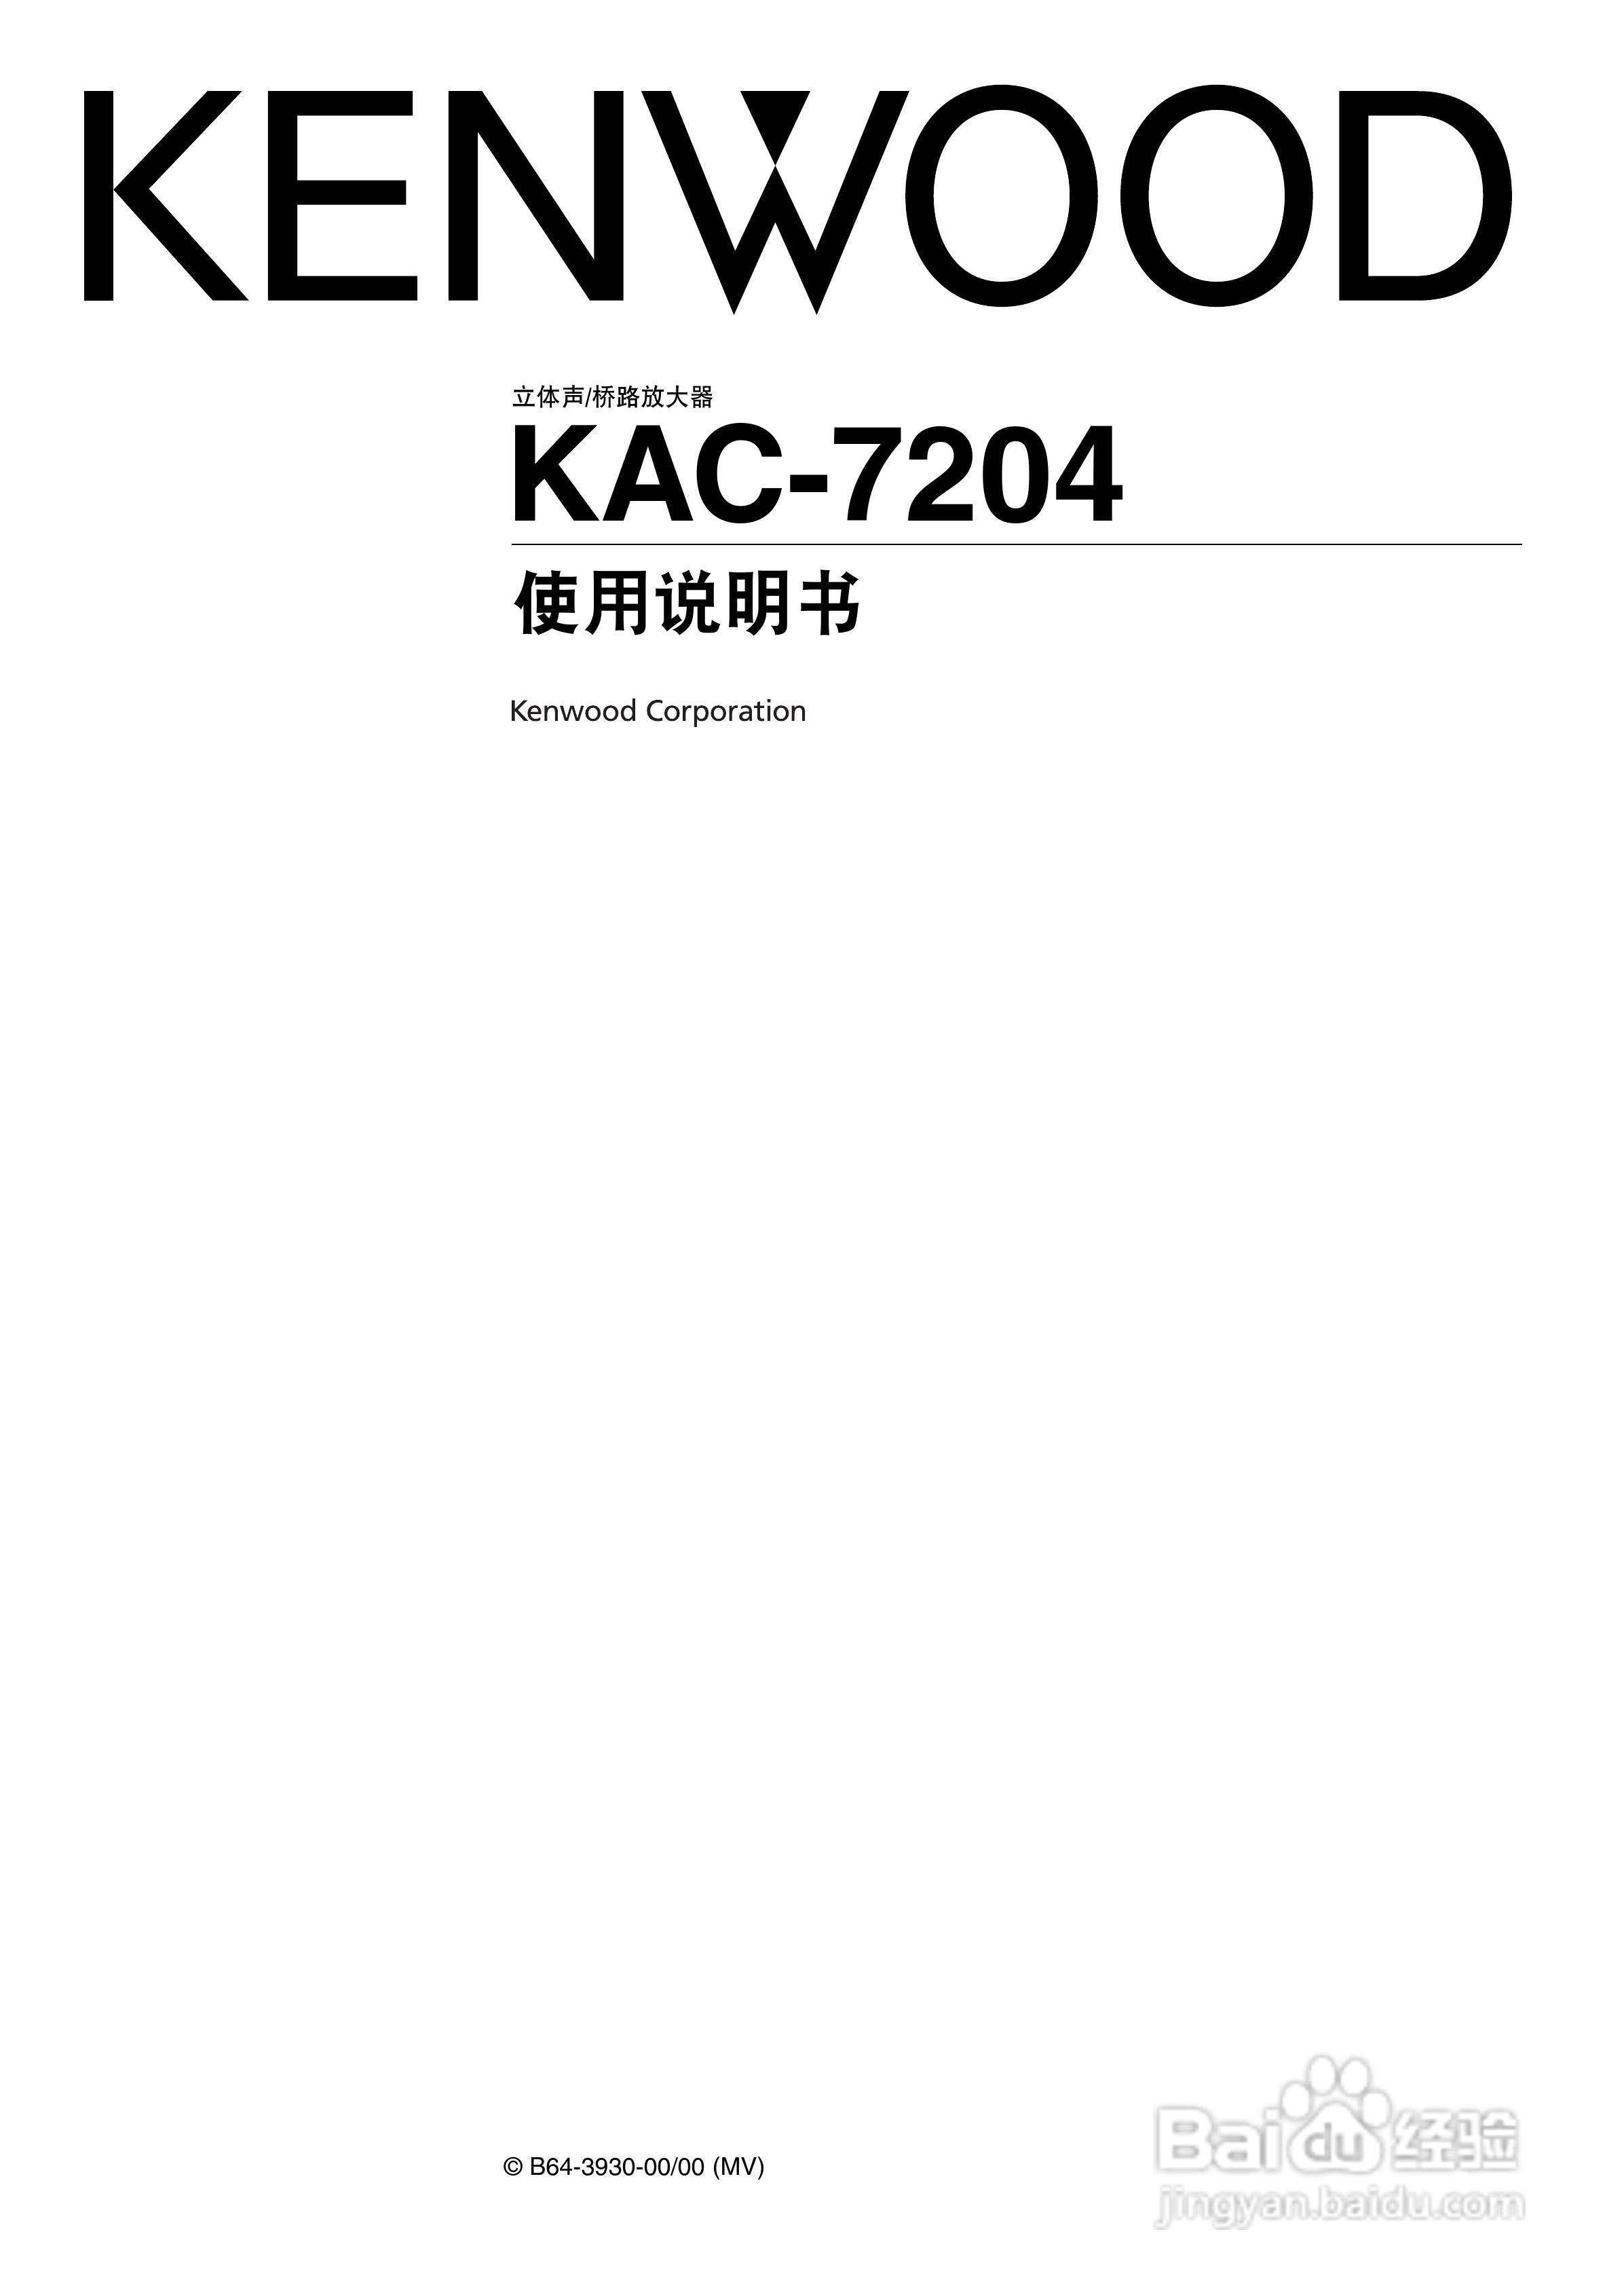 kenwood kac-7204立体声/桥路放大器使用说明书